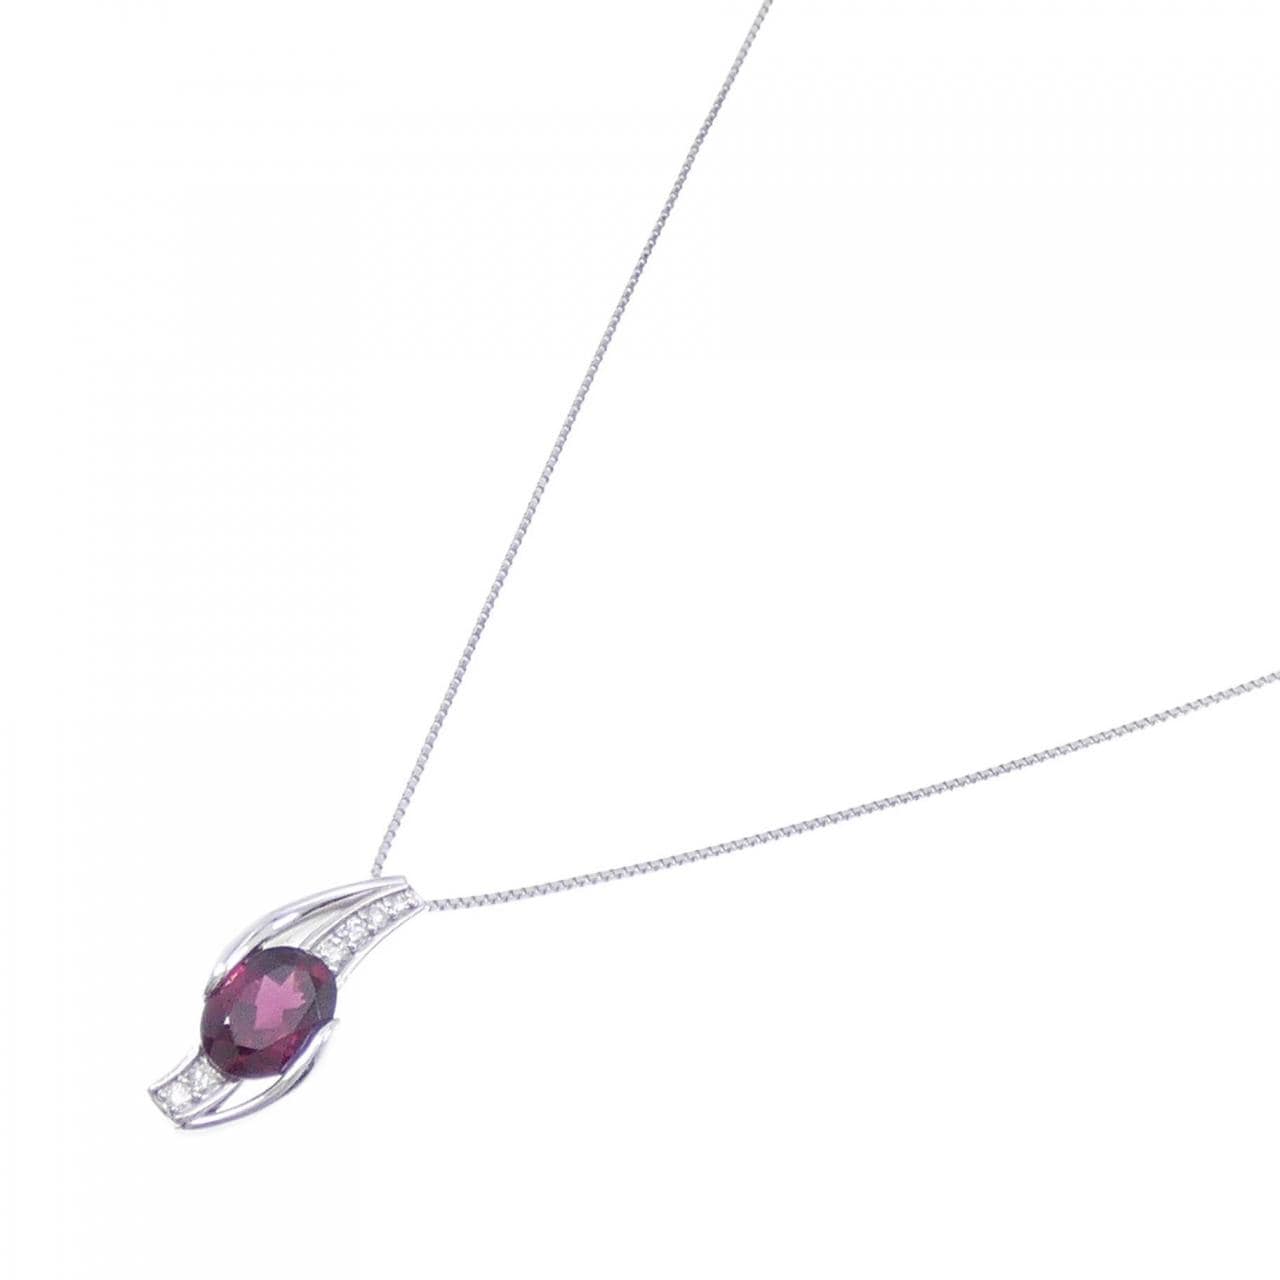 K18WG Garnet necklace 1.63CT